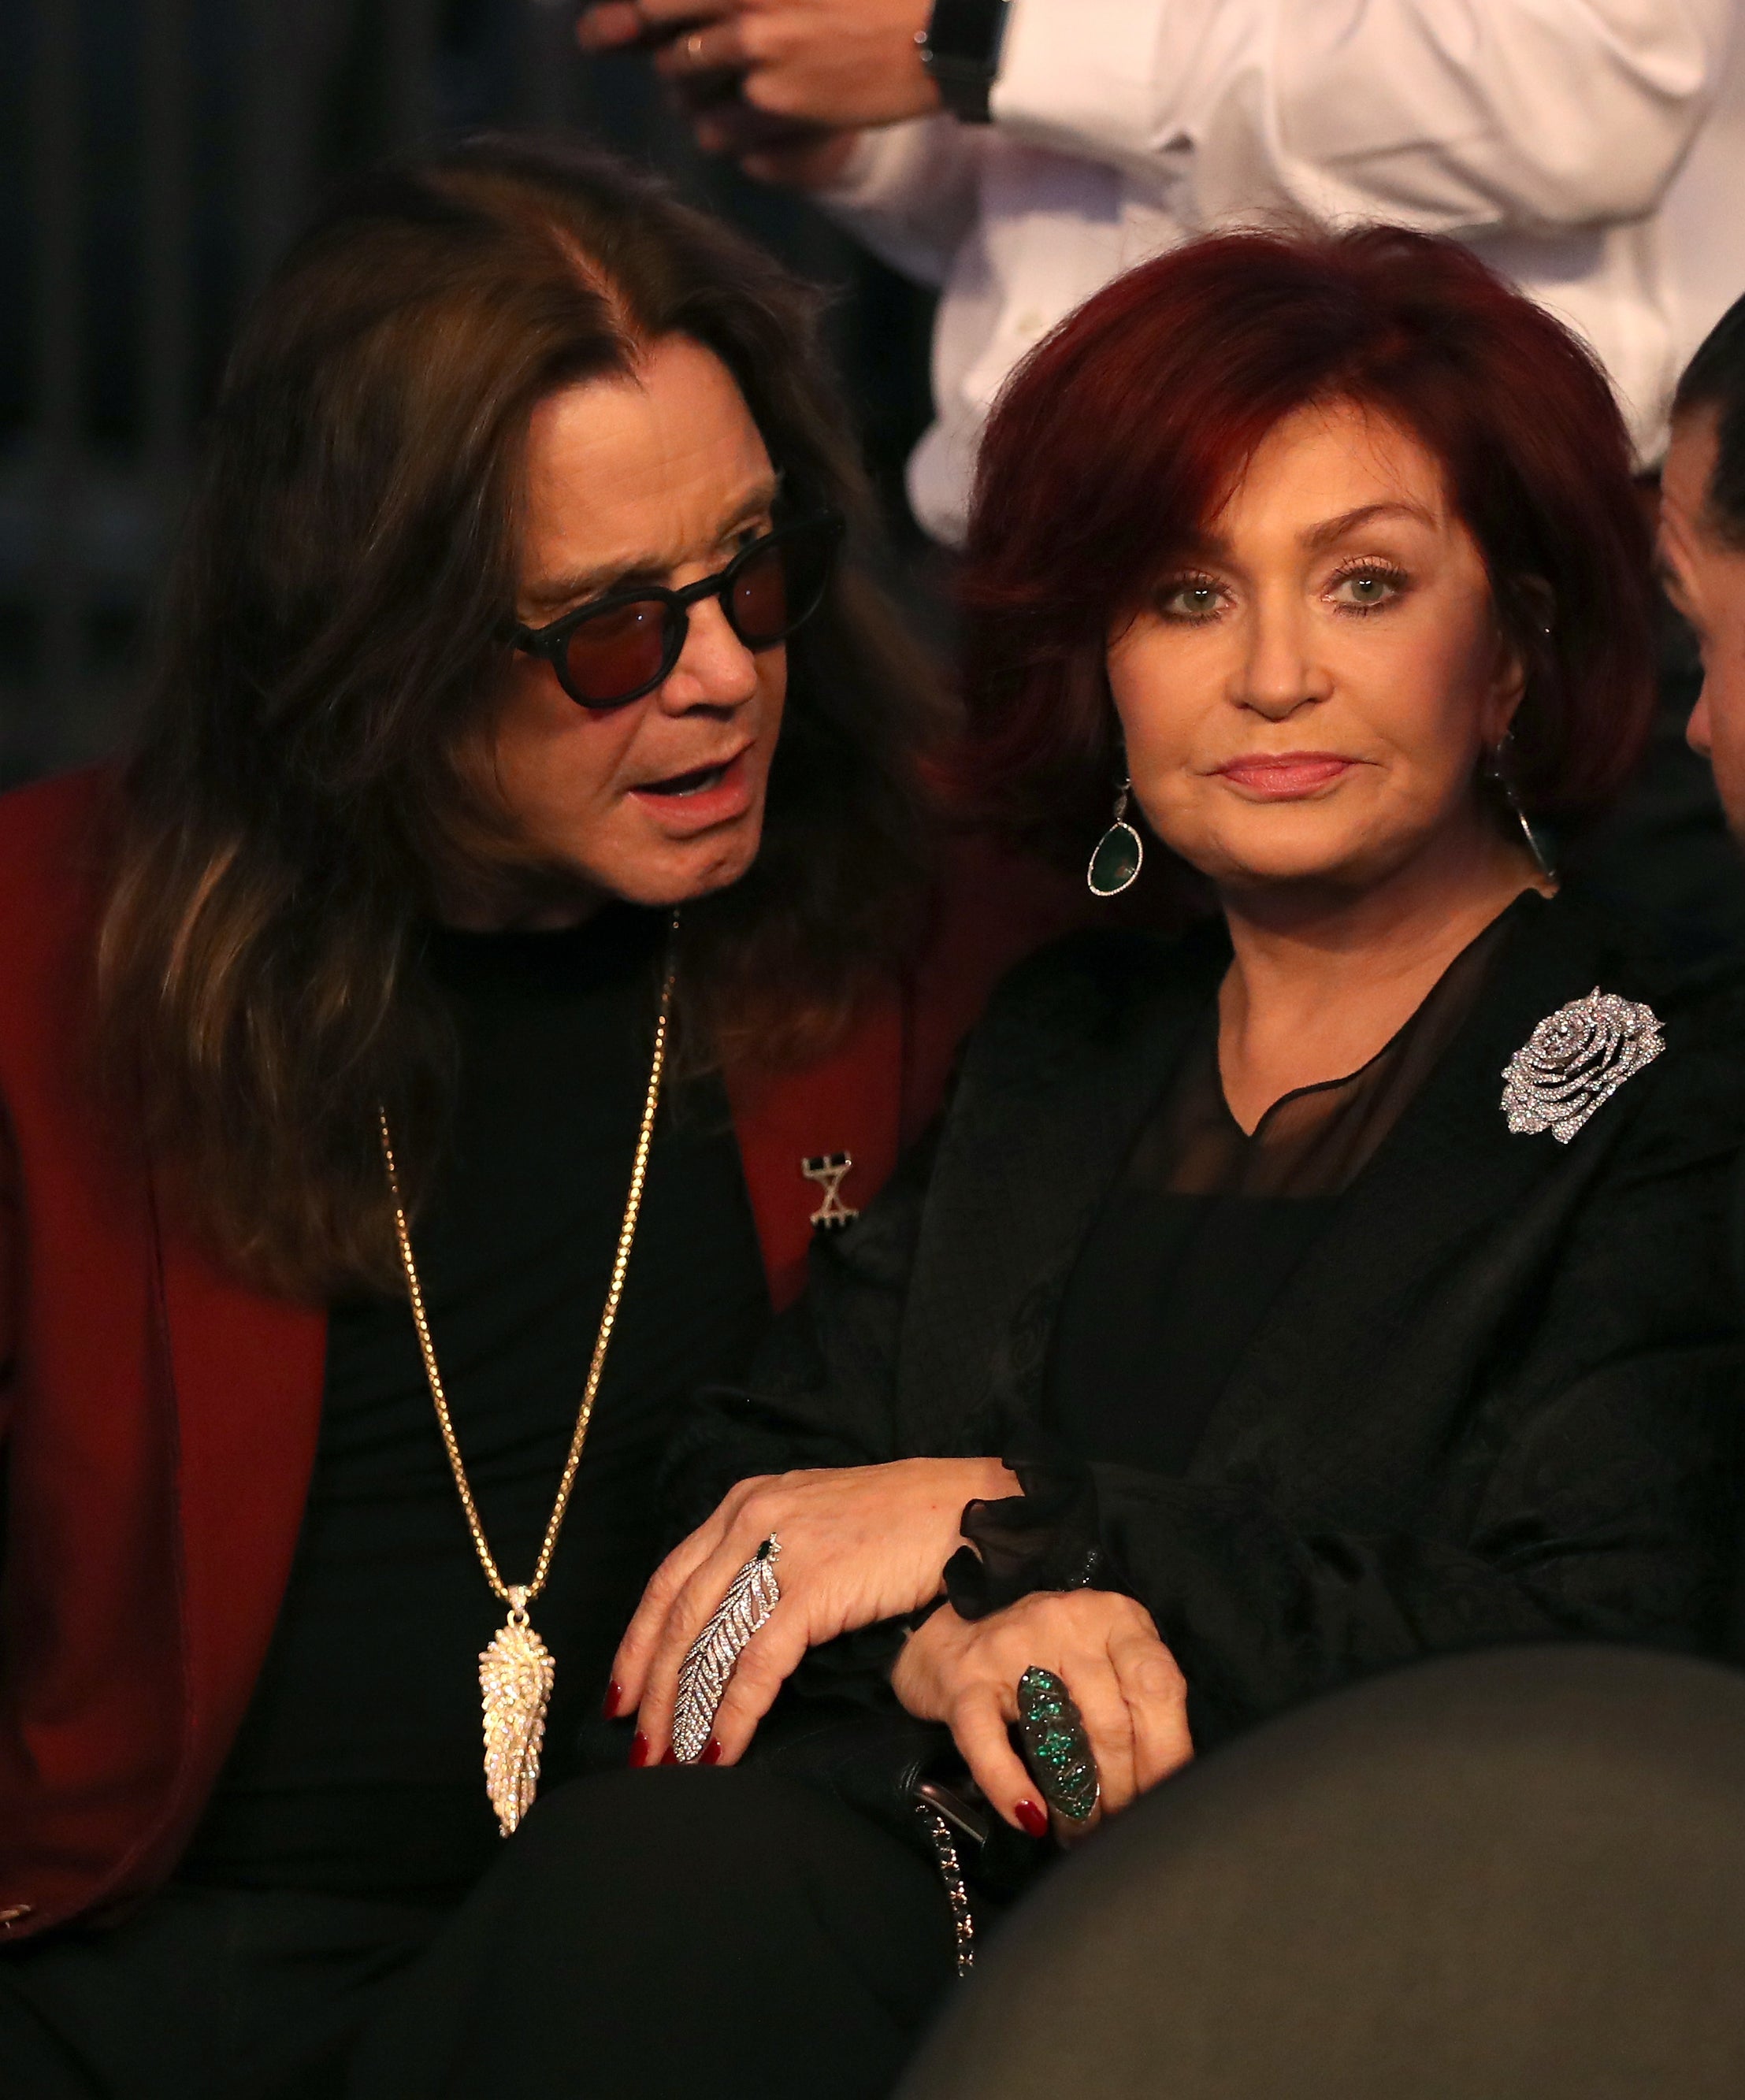 Ozzy Osbourne and Sharon Osbourne sit close together in conversation